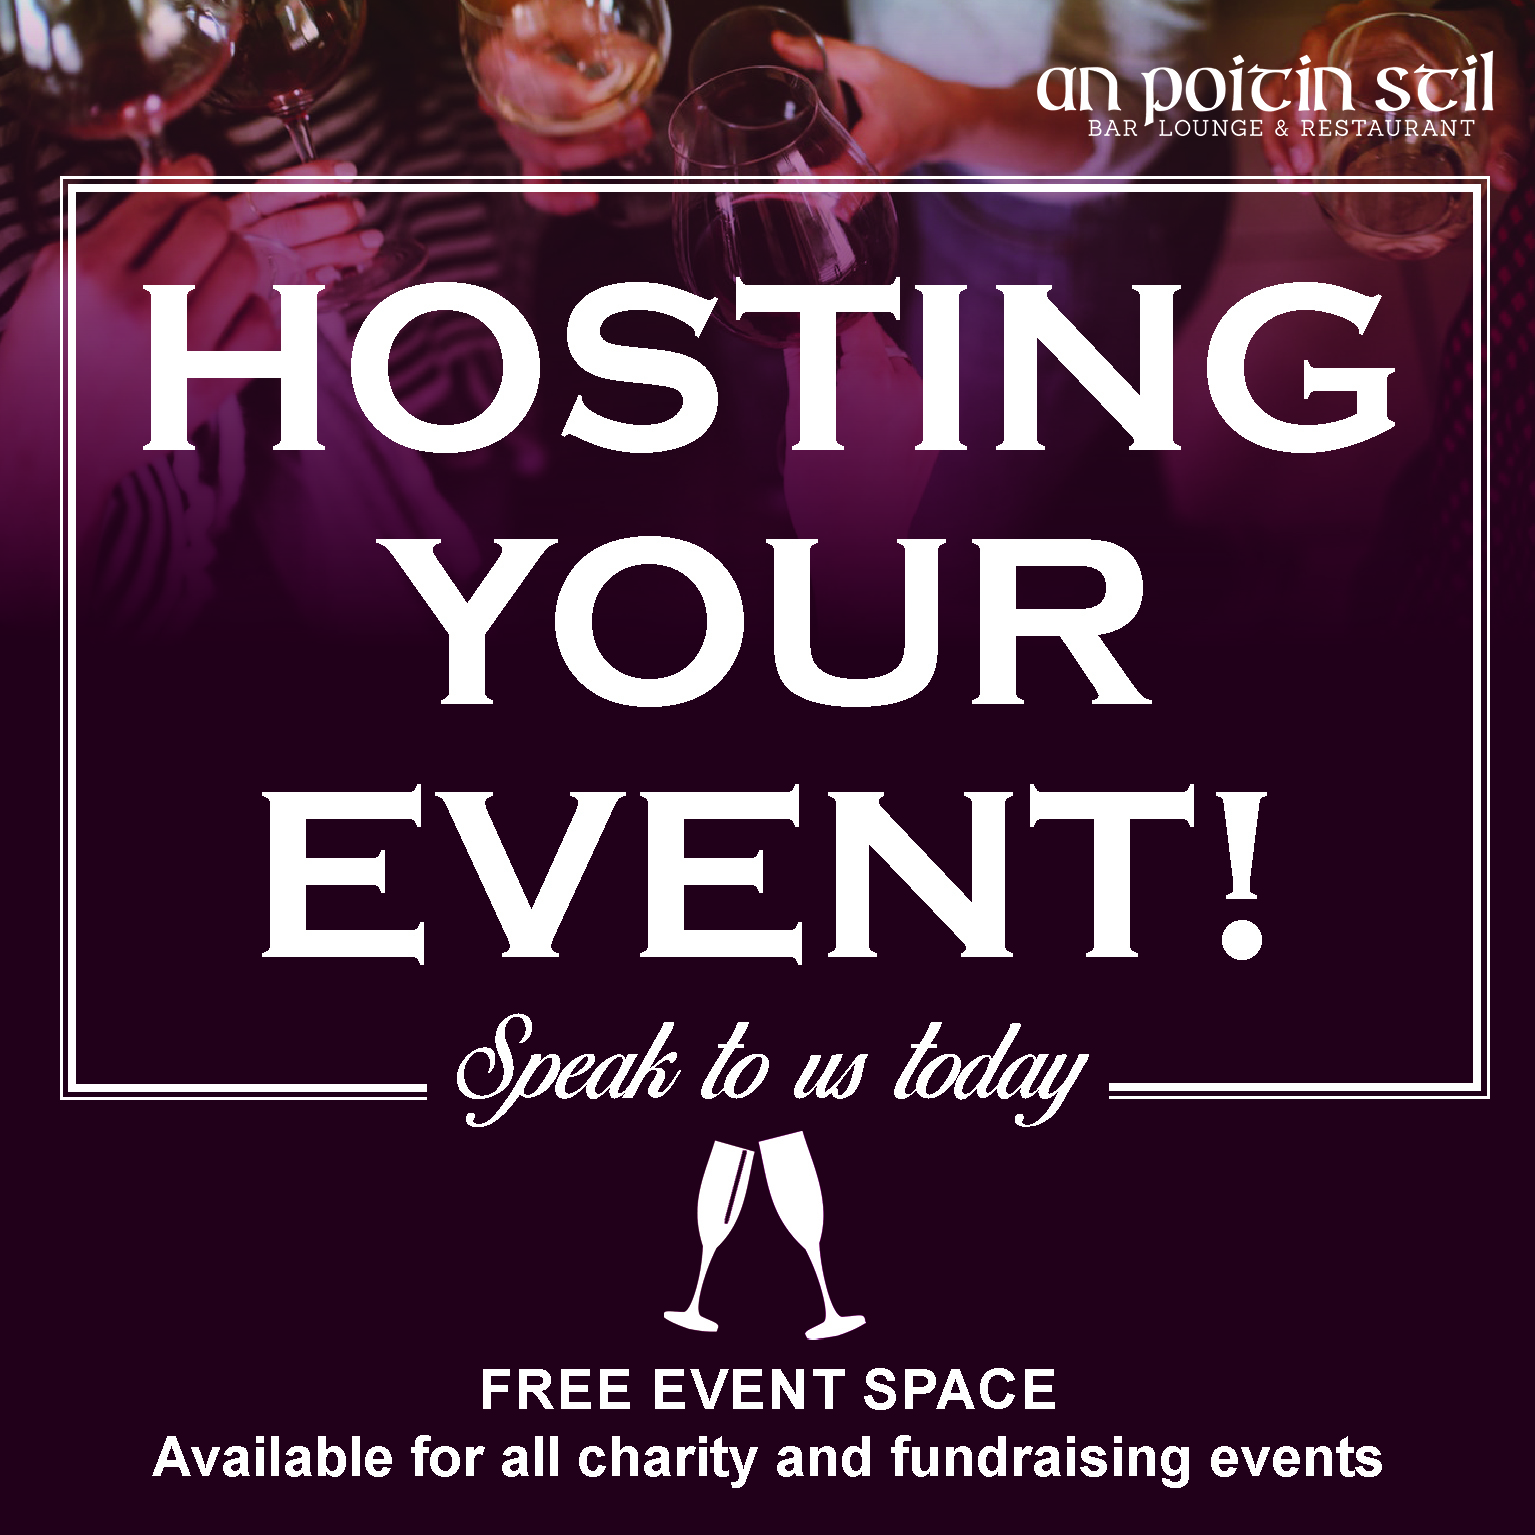 Hosting an event?